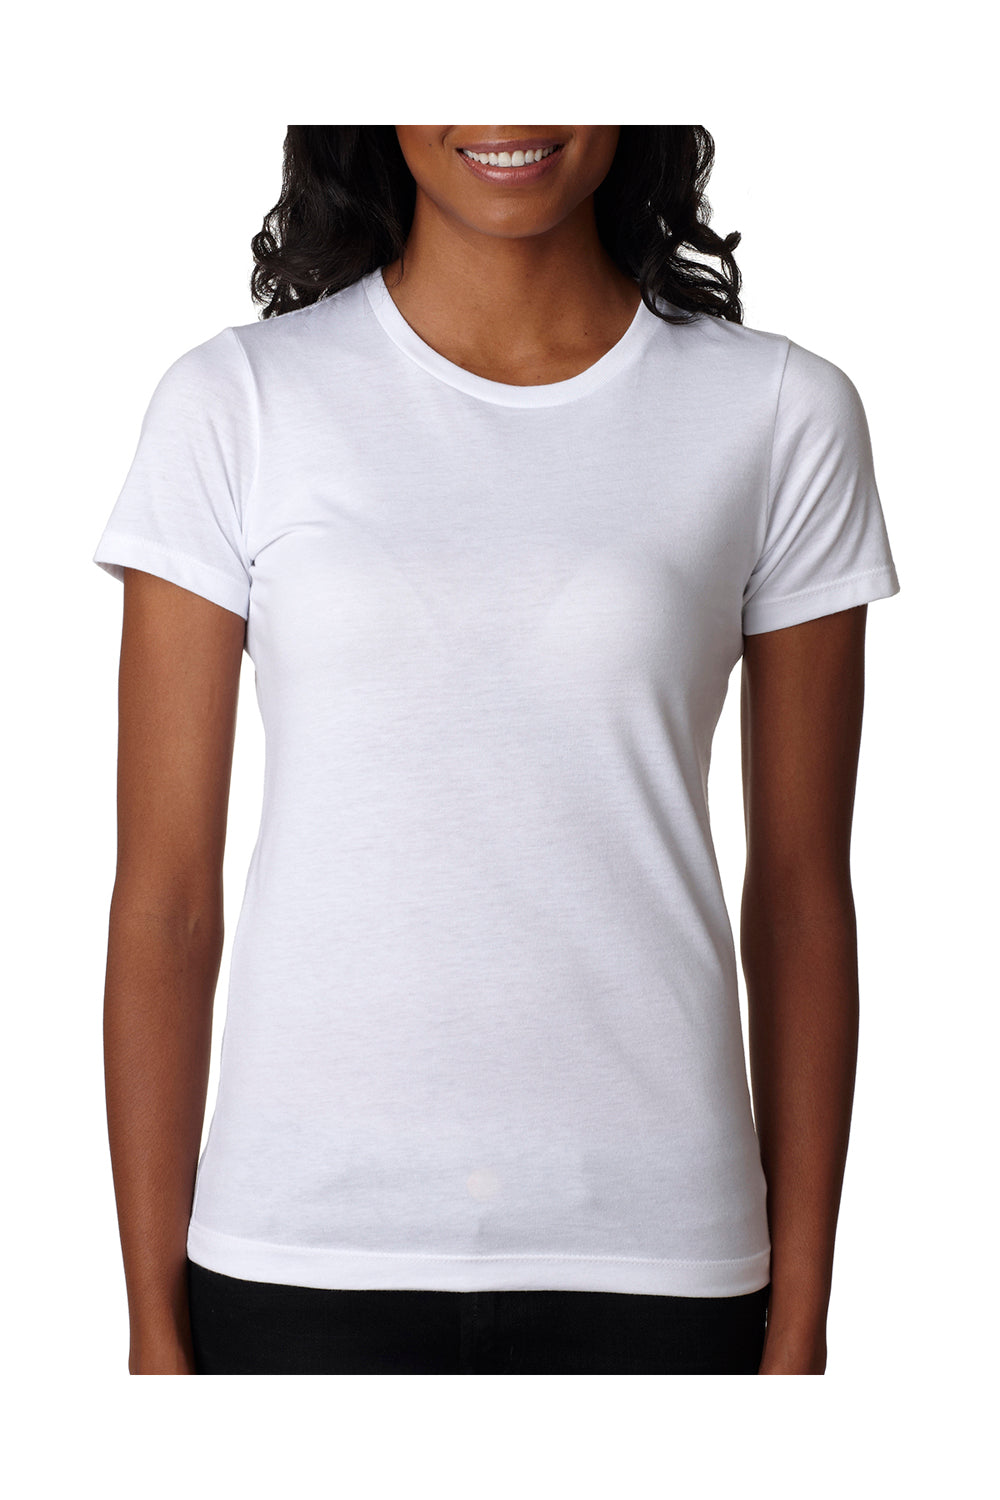 Next Level 6610 Womens CVC Jersey Short Sleeve Crewneck T-Shirt White Front